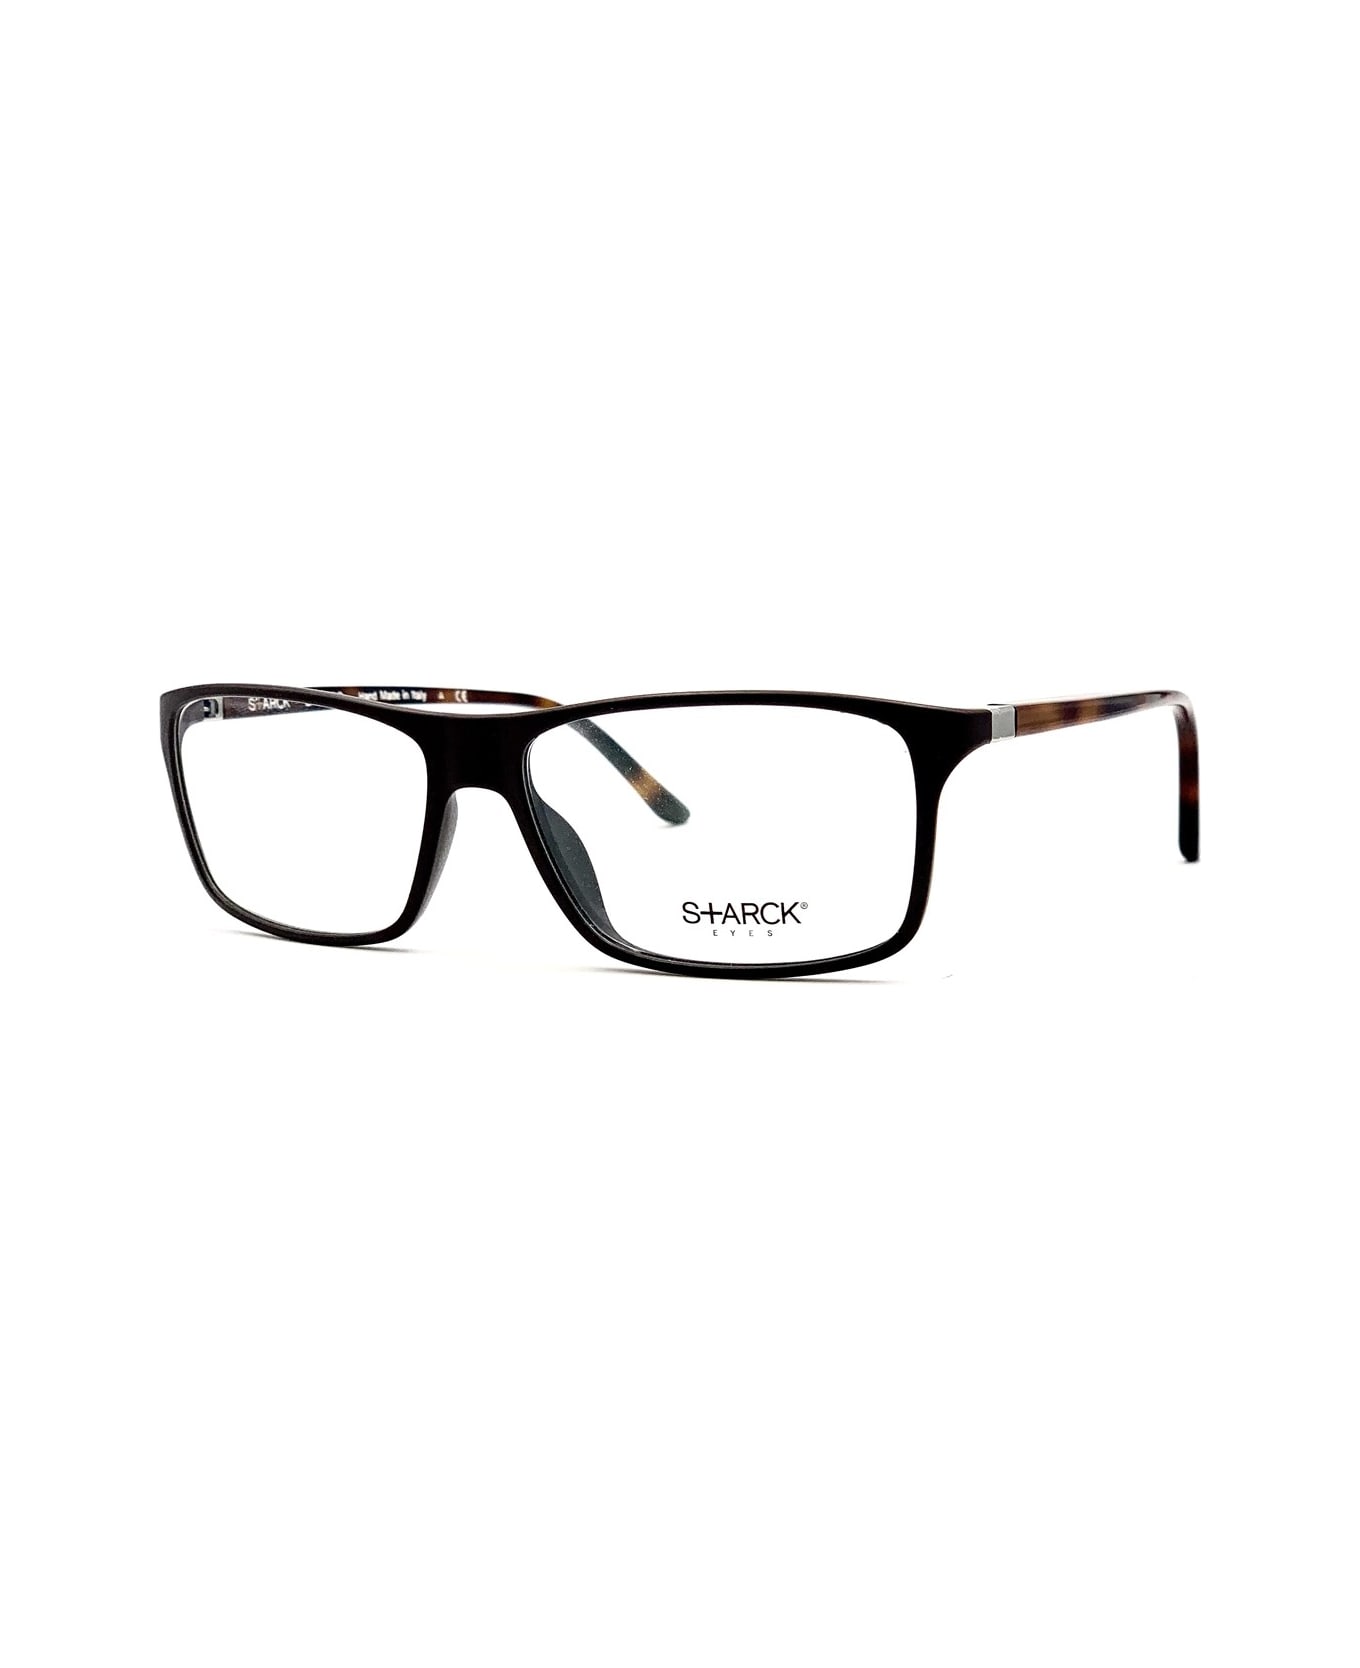 Philippe Starck 1043 Vista Glasses - Nero アイウェア